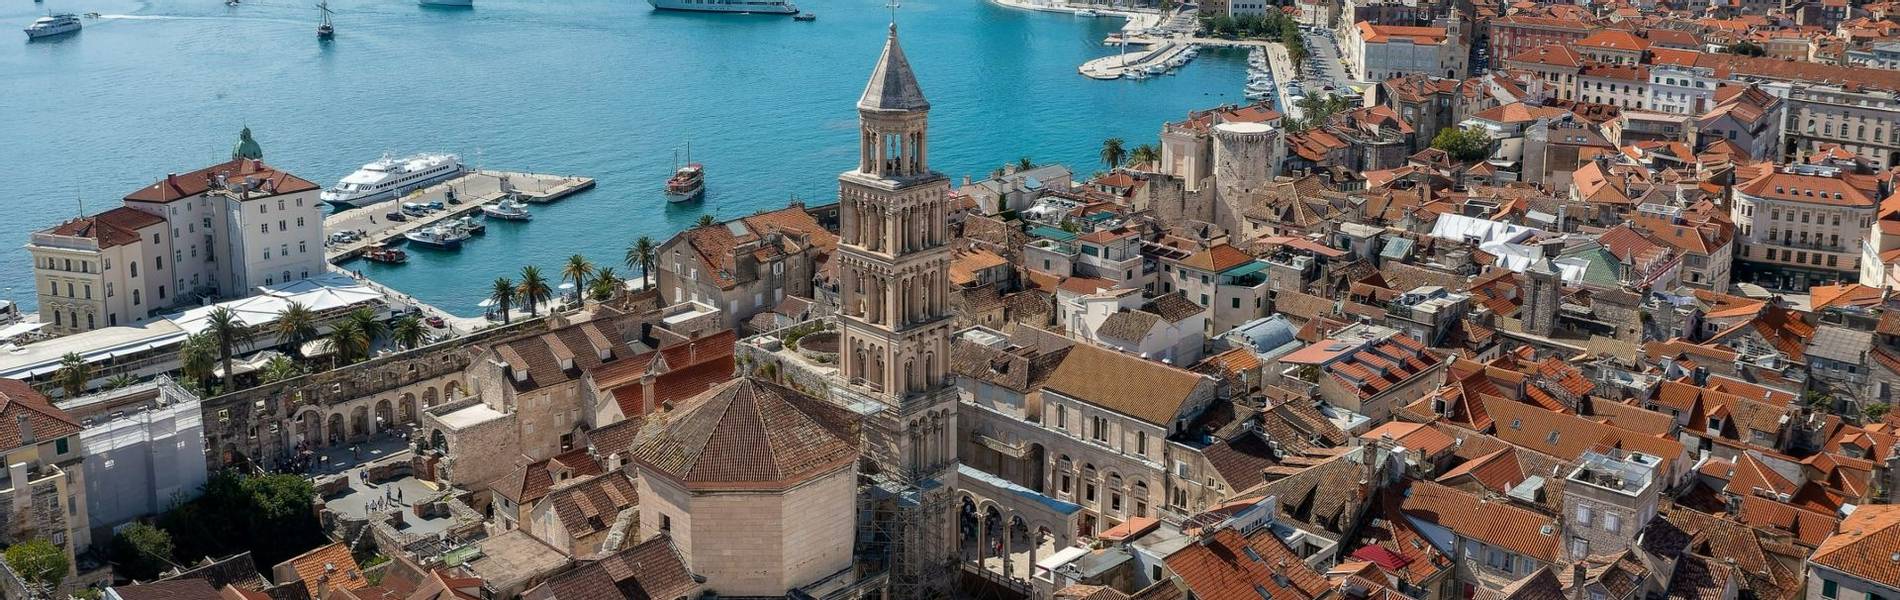 Aerial Drone View of Split Old Town, Croatia